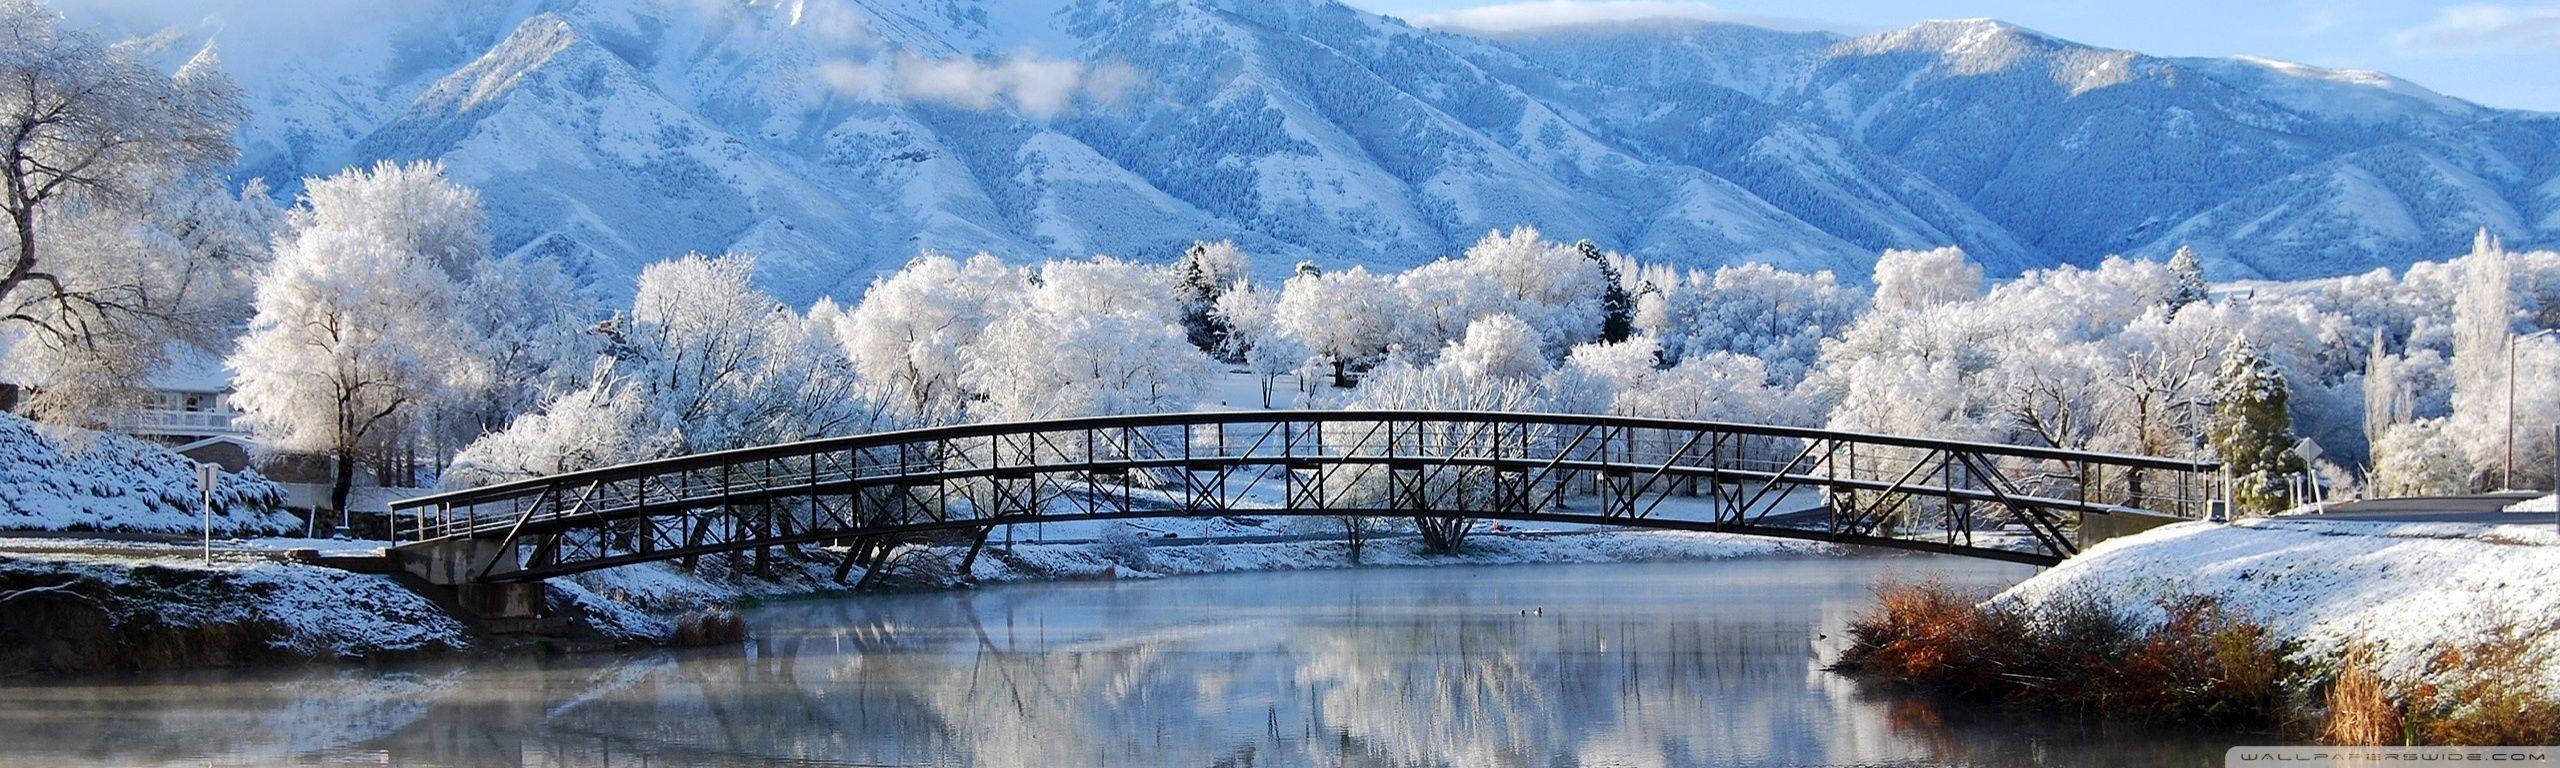 Winter Season Long Bridge